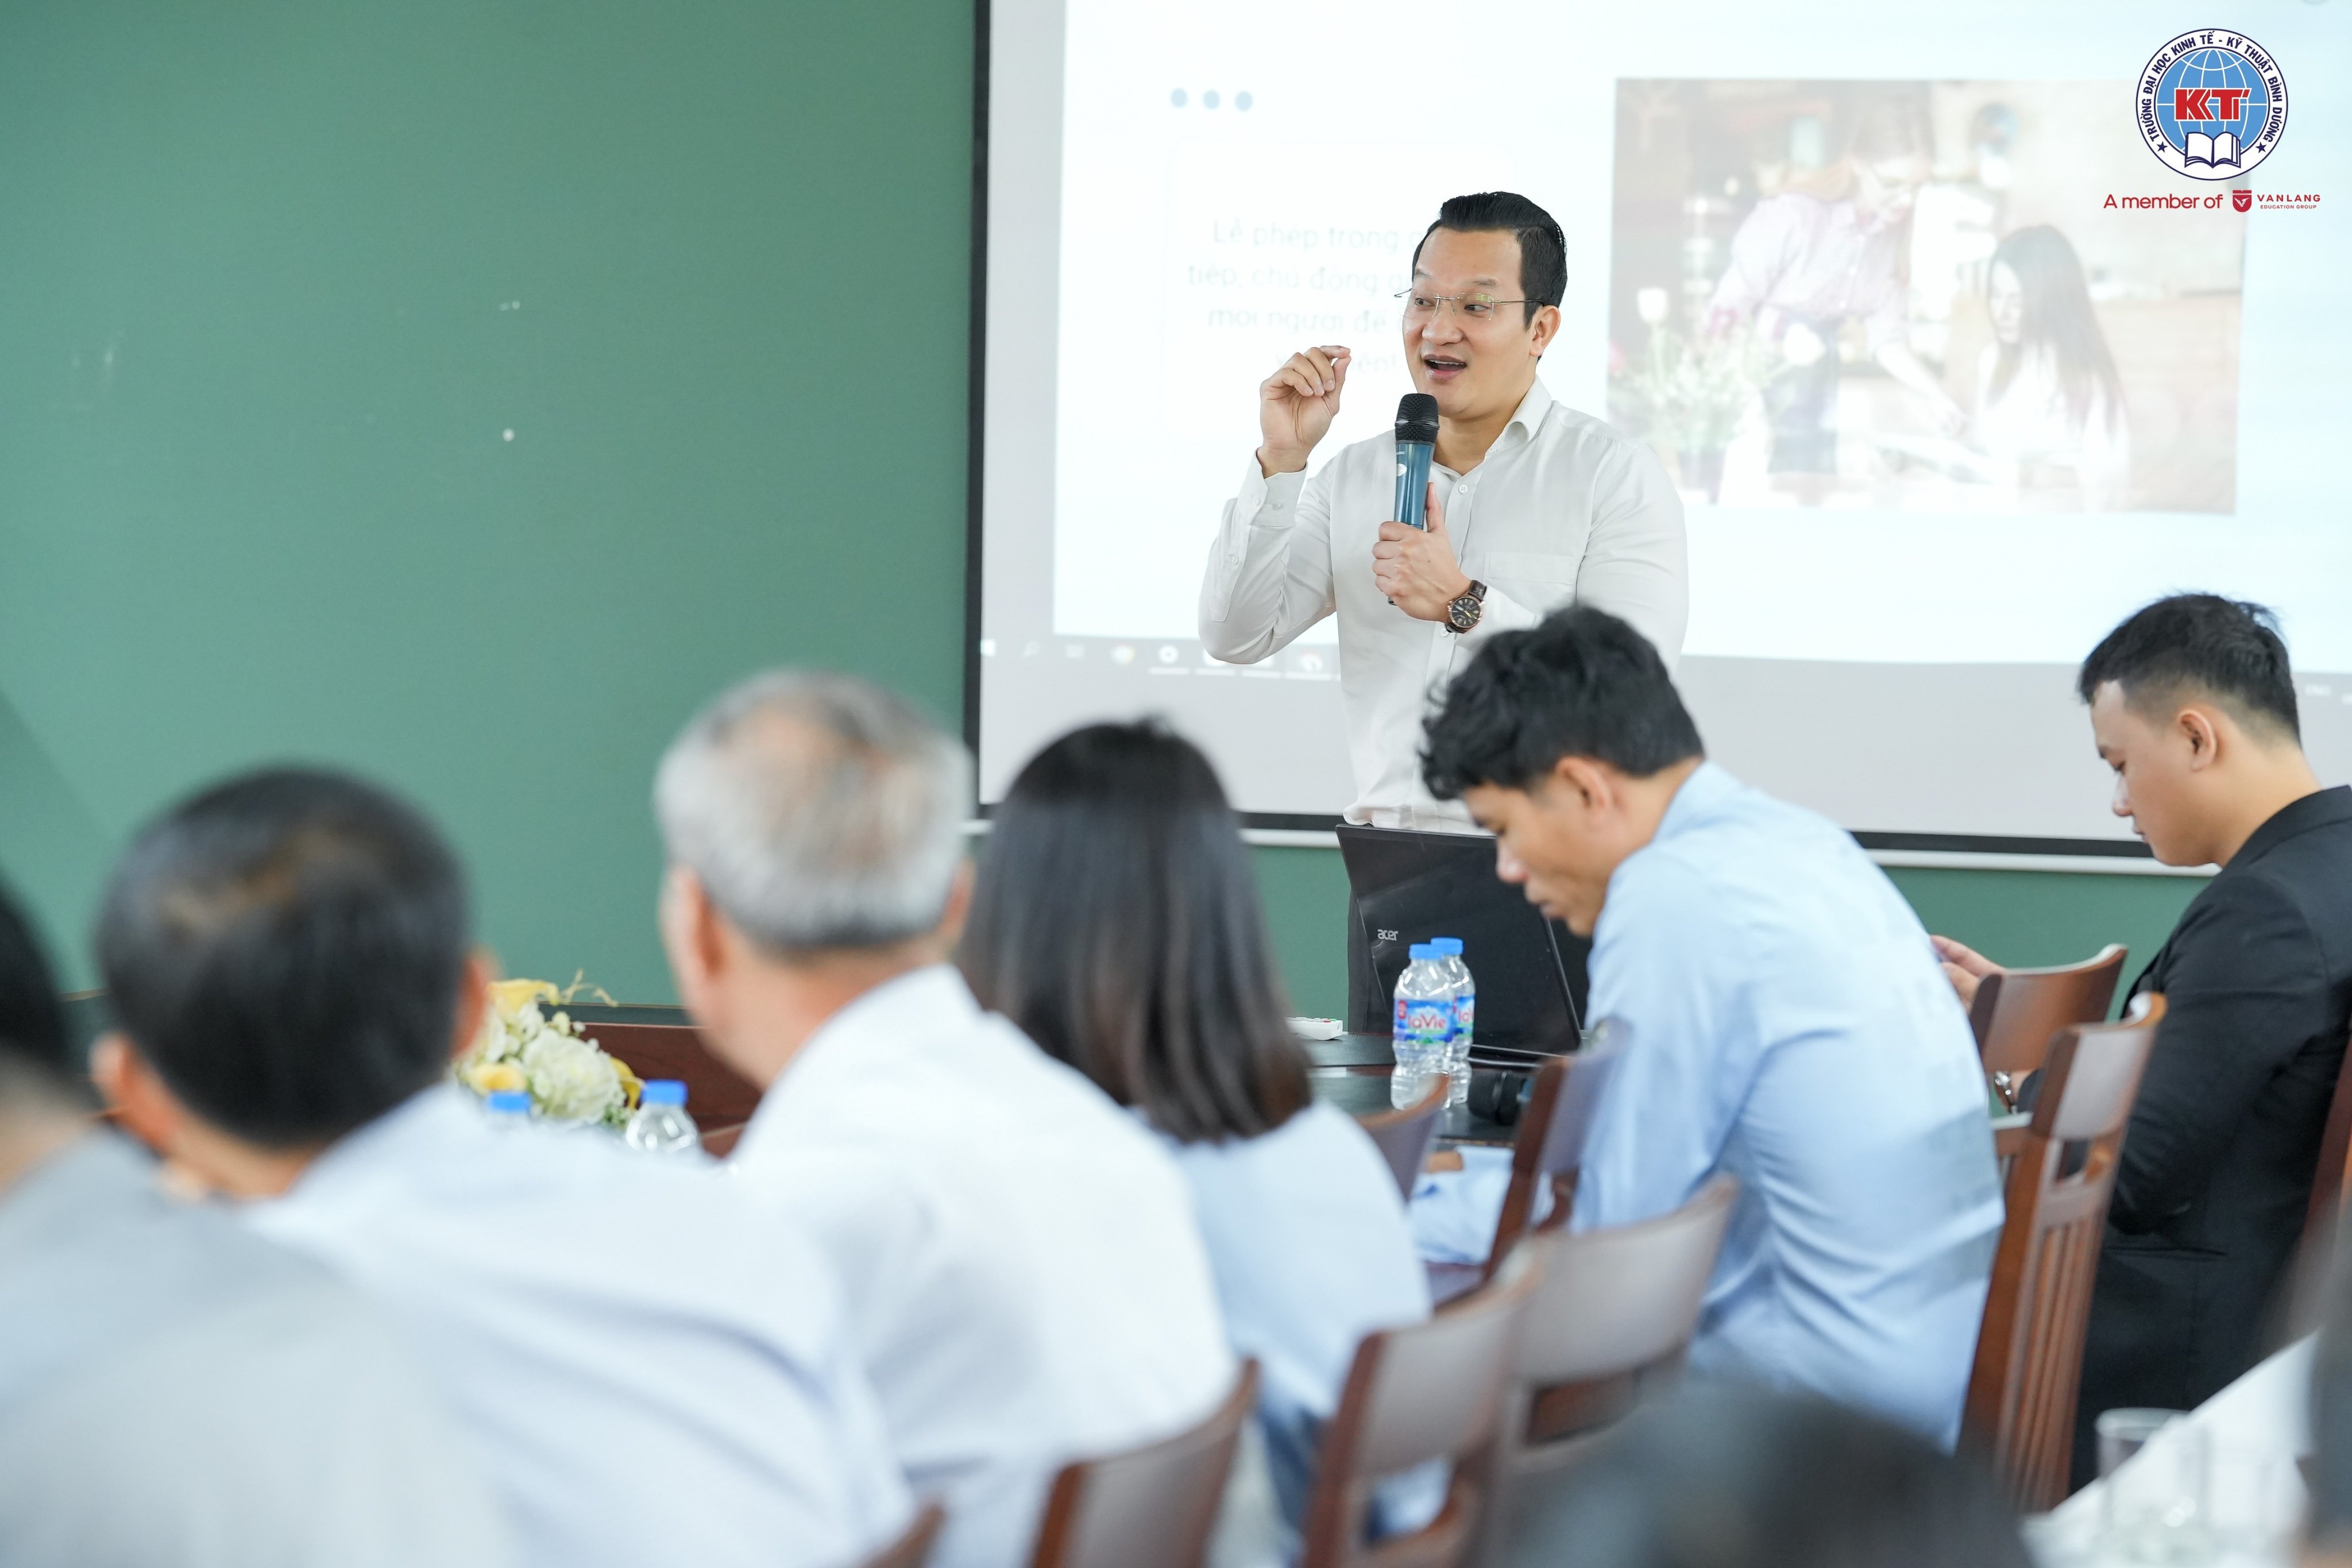 CEO Dương Tống - Keynote Speaker